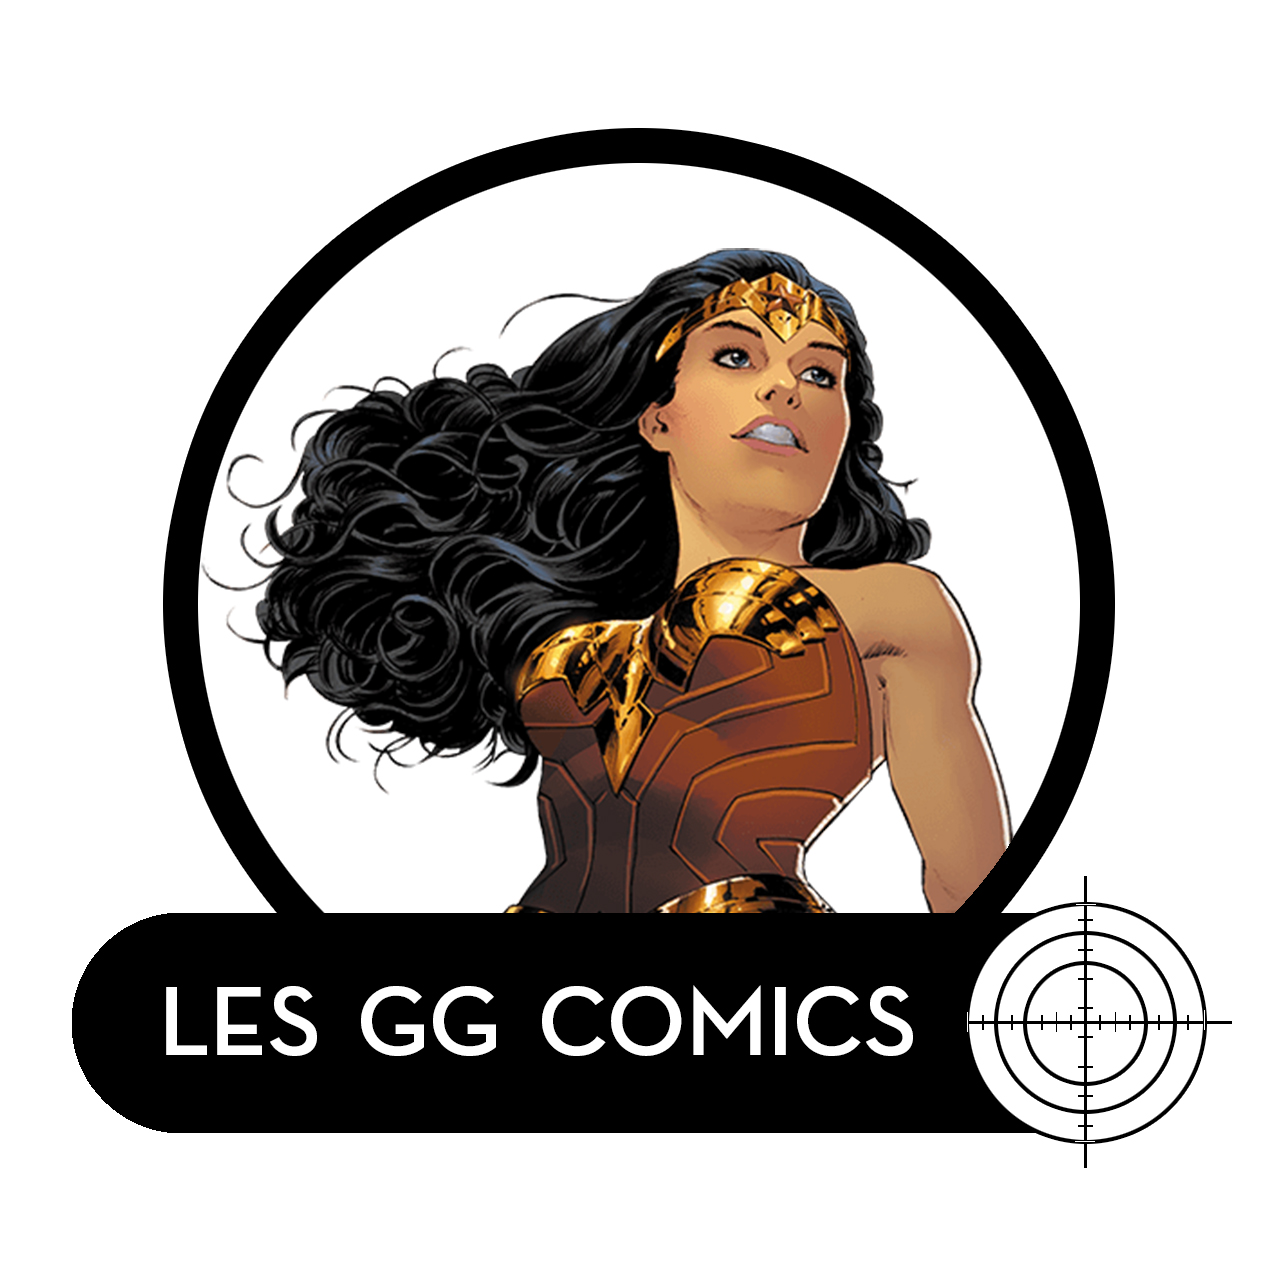 Les GG comics - HS7 : ITW de Nicola Scott [Paris Manga 2019]